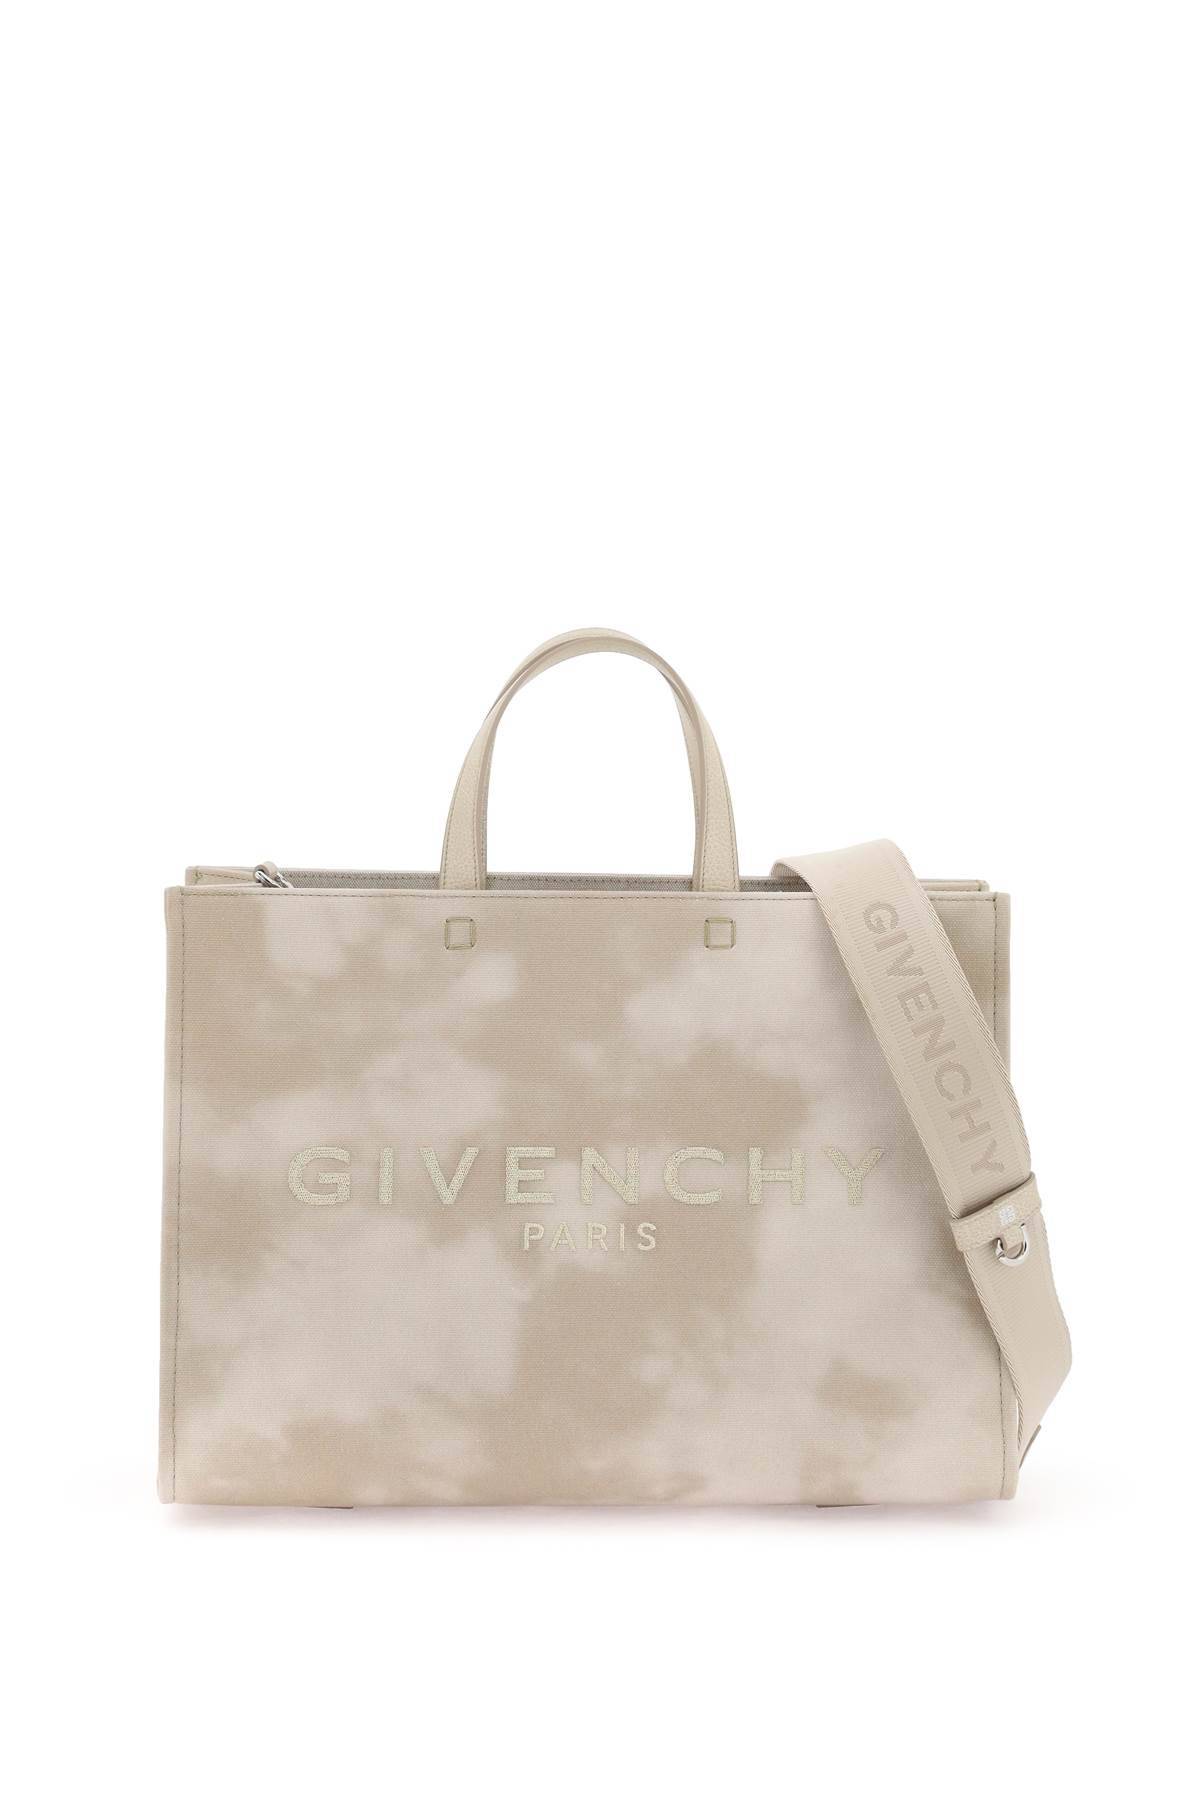 Givenchy Medium G-tote Bag In Neutro